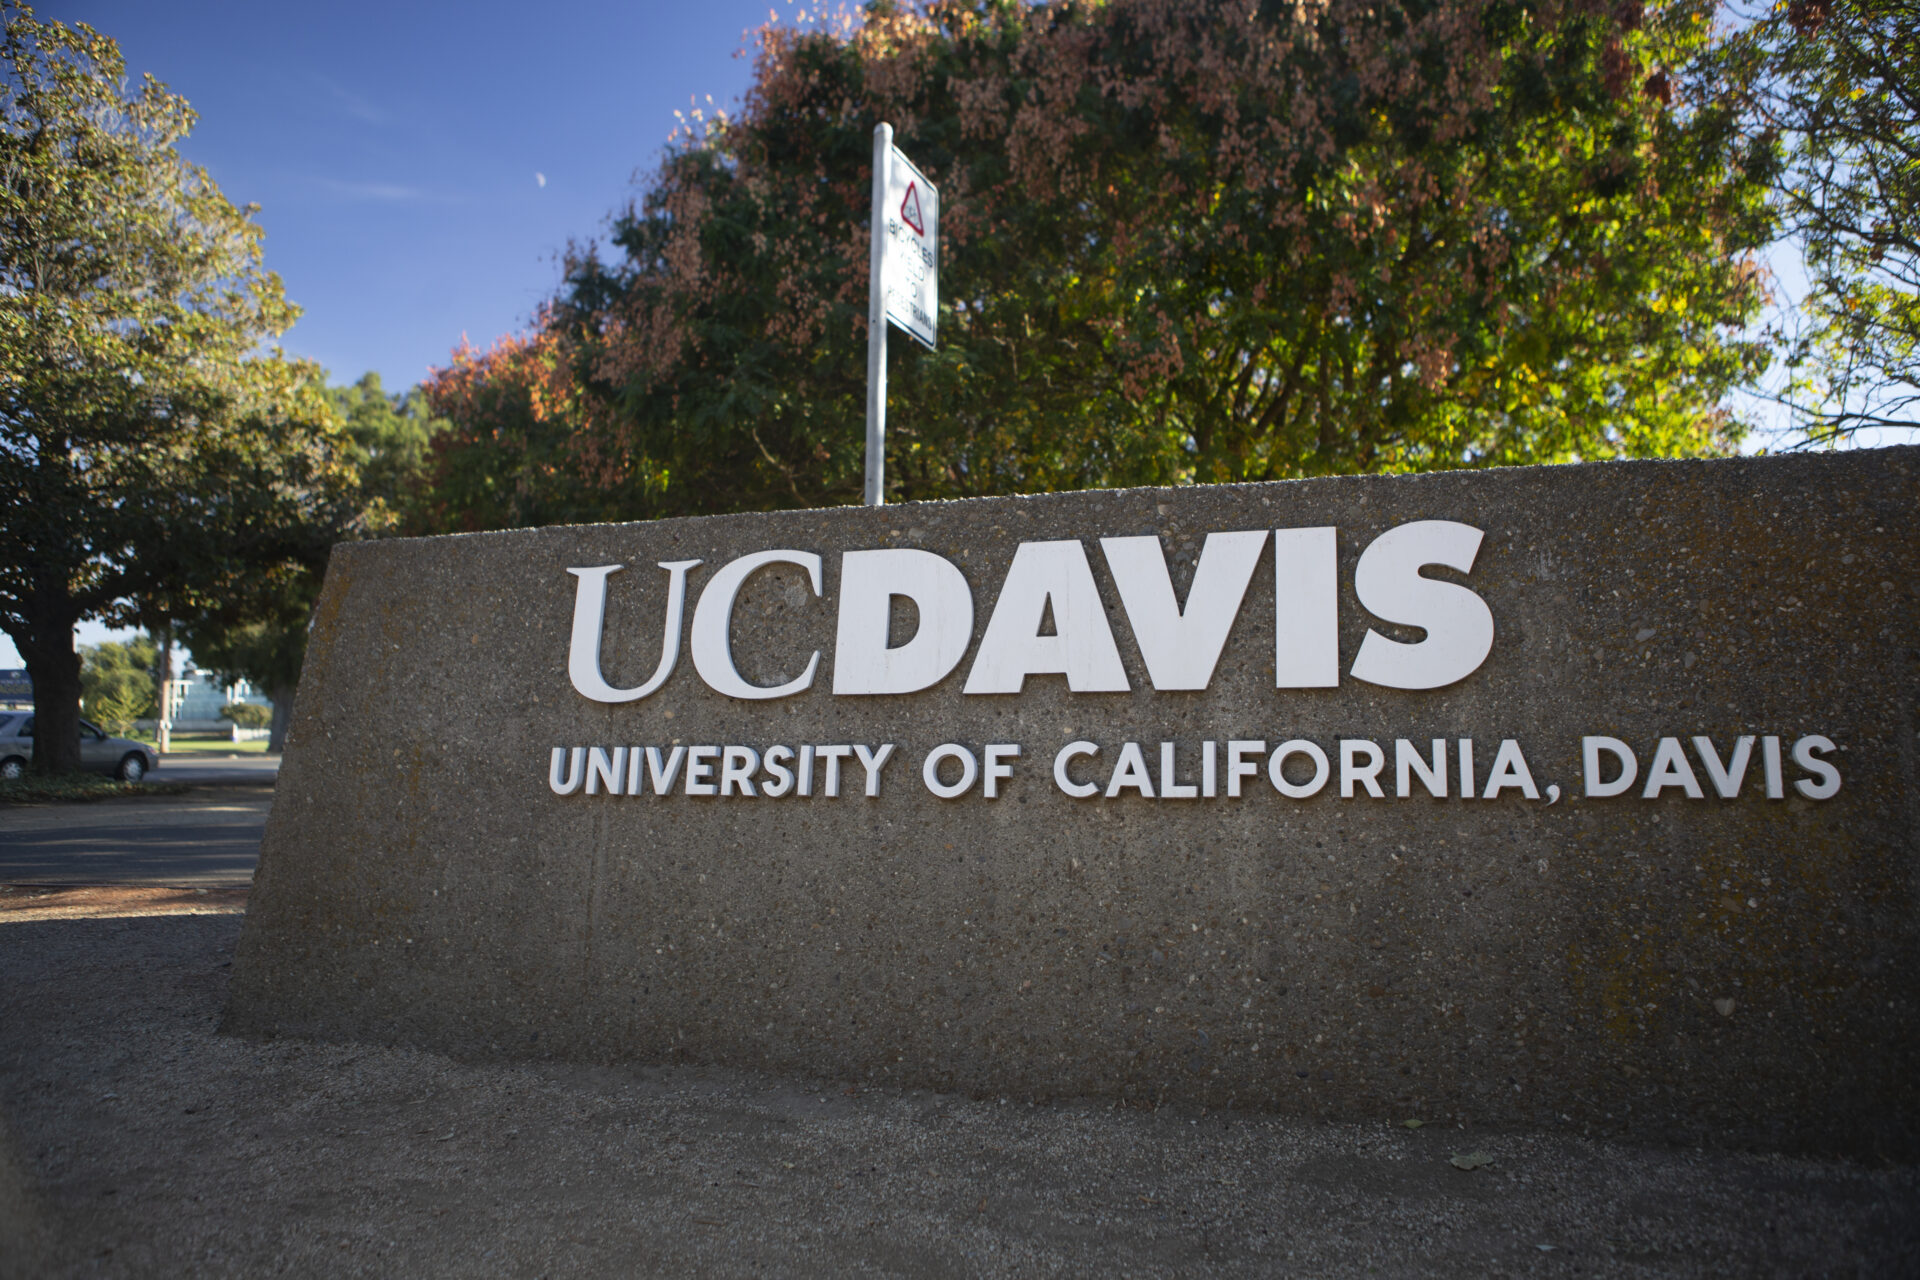 UC Davis achieves high rankings among top universities The Aggie